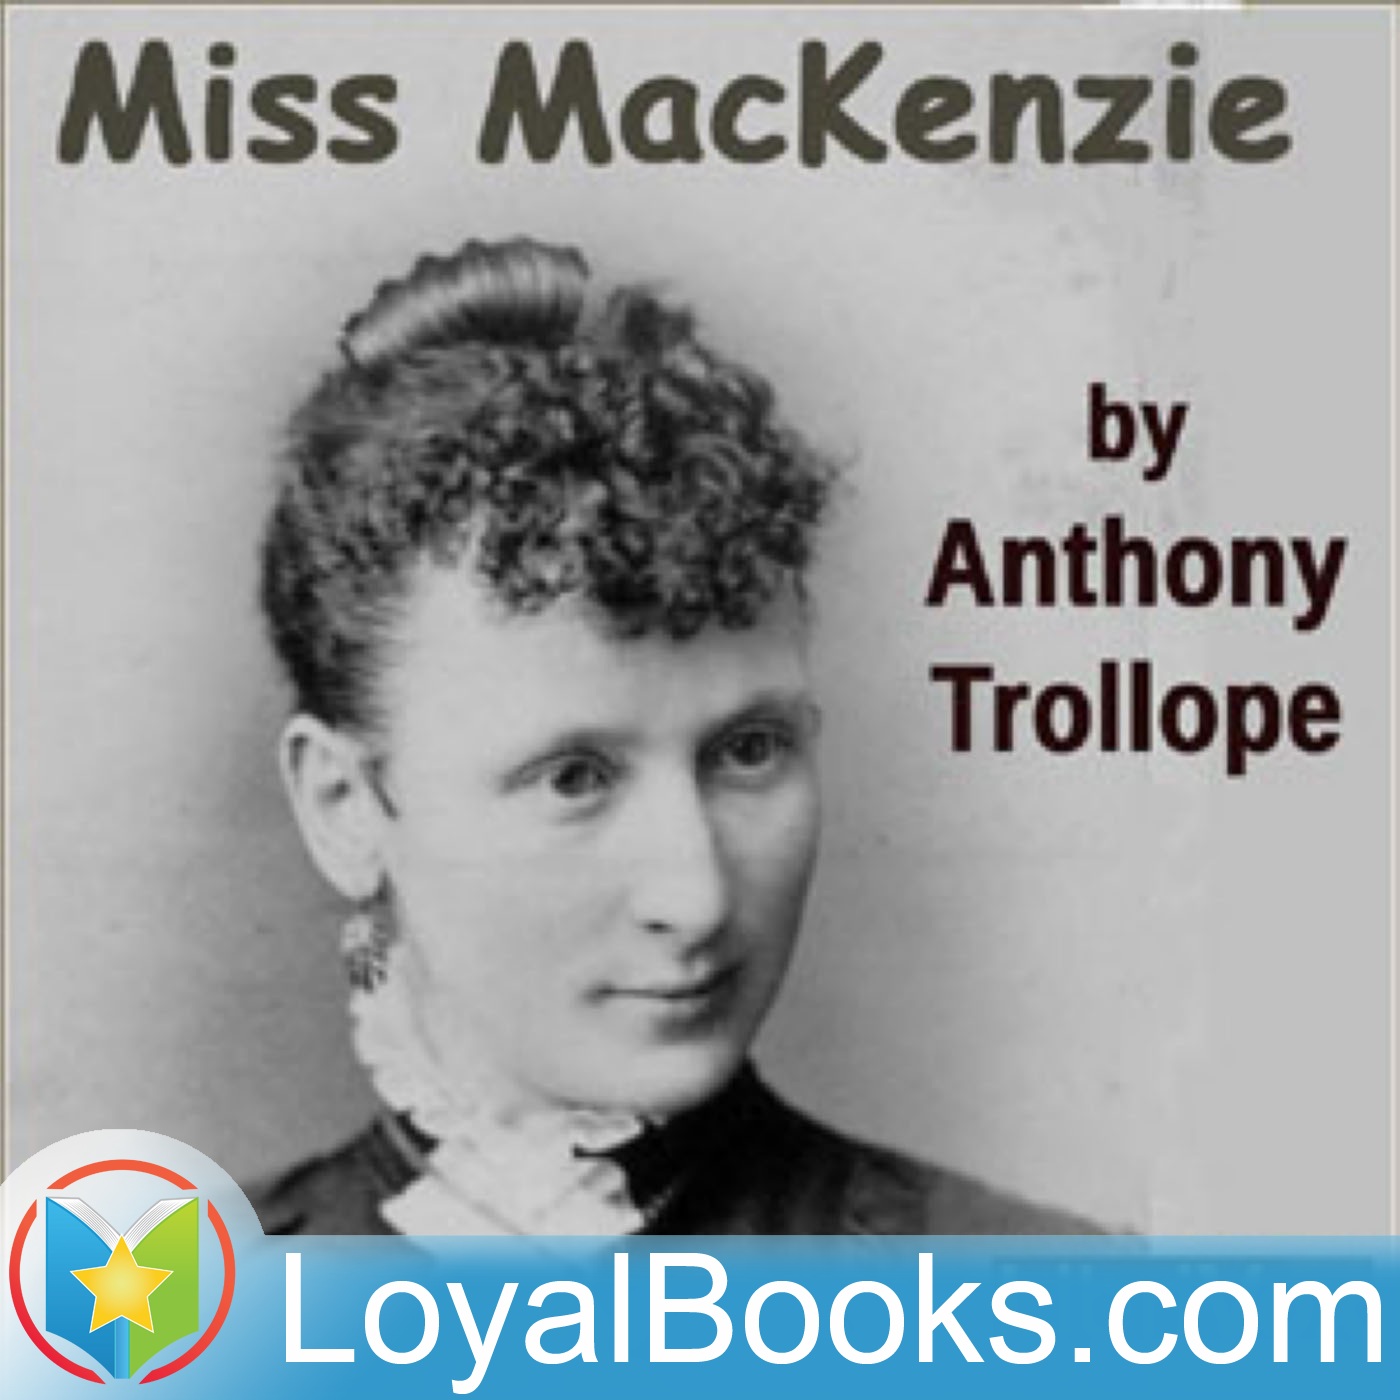 Miss Mackenzie by Anthony Trollope